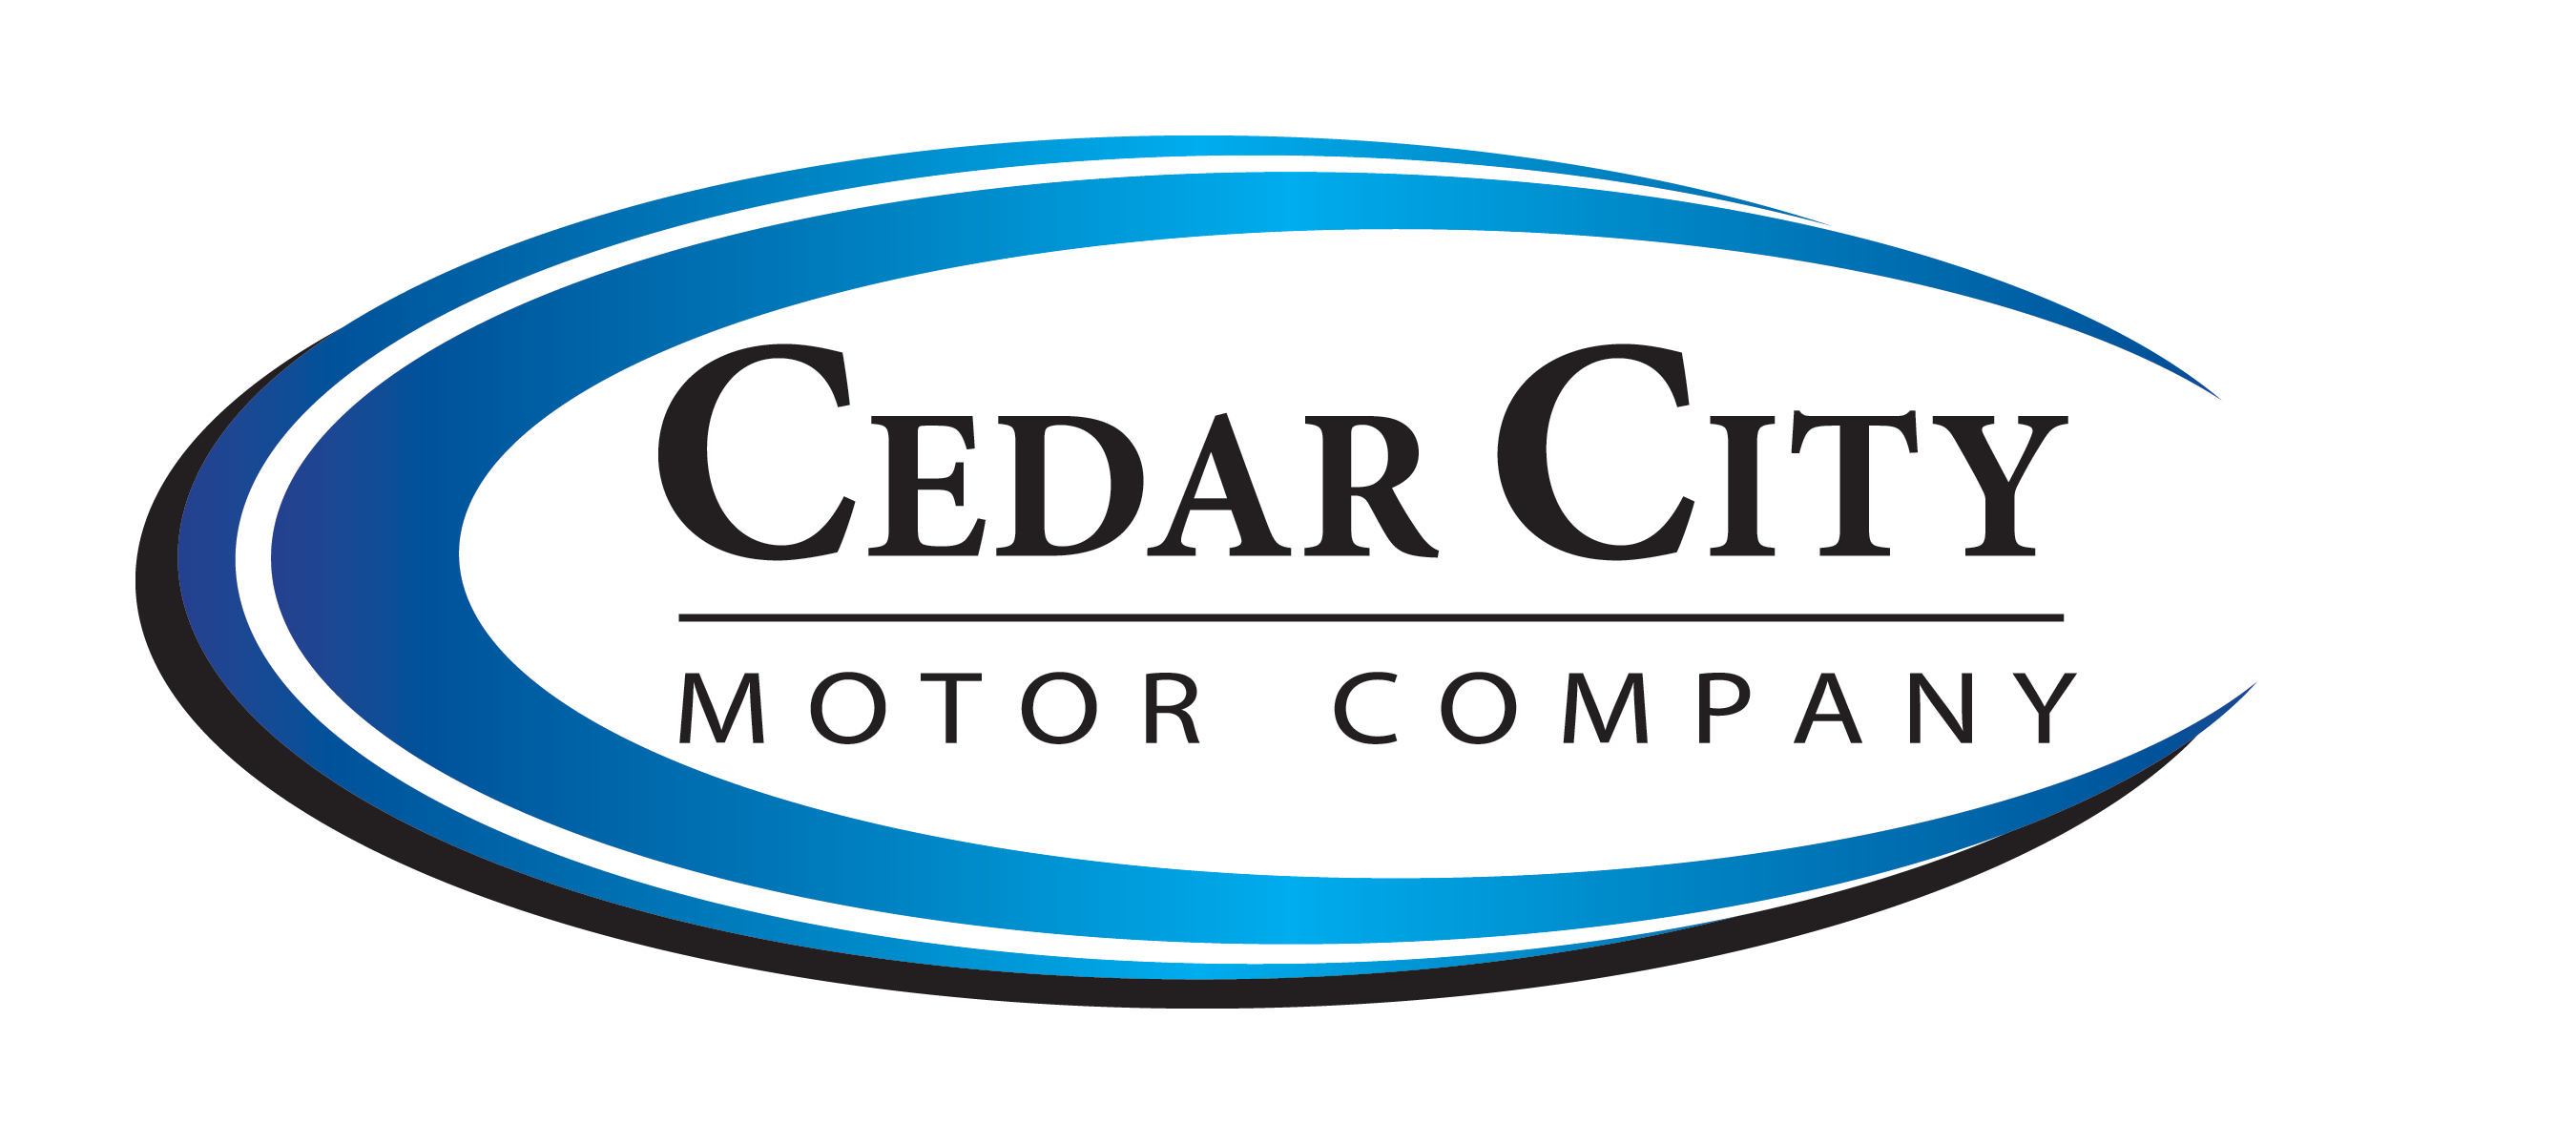 B, Cedar City Motor Company (Tier 3)